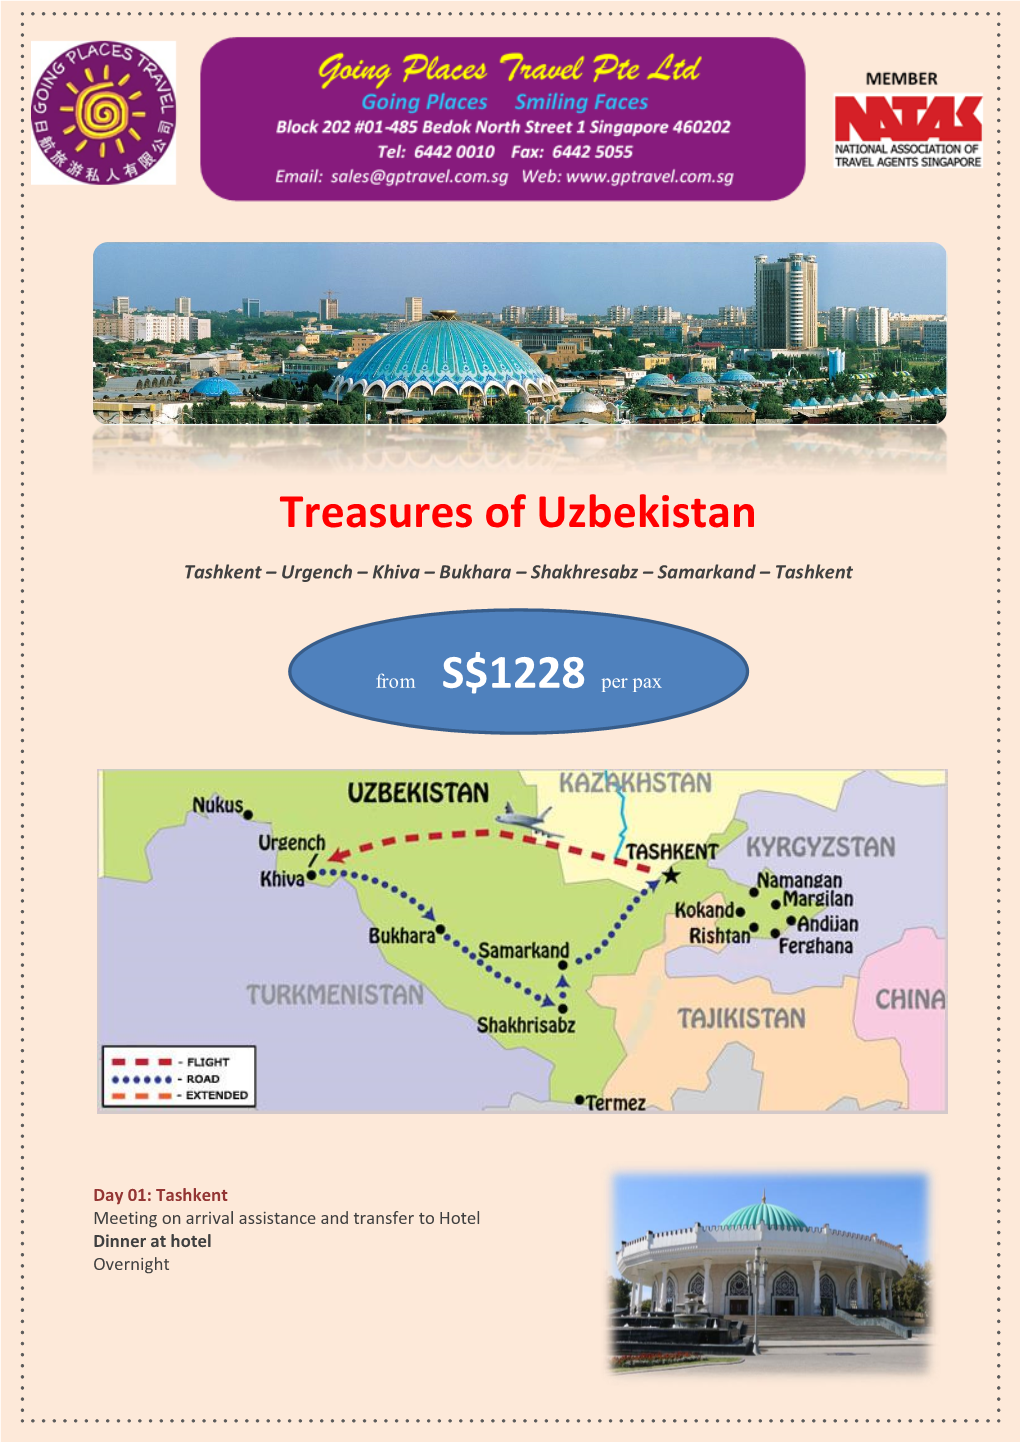 Treasures of Uzbekistan